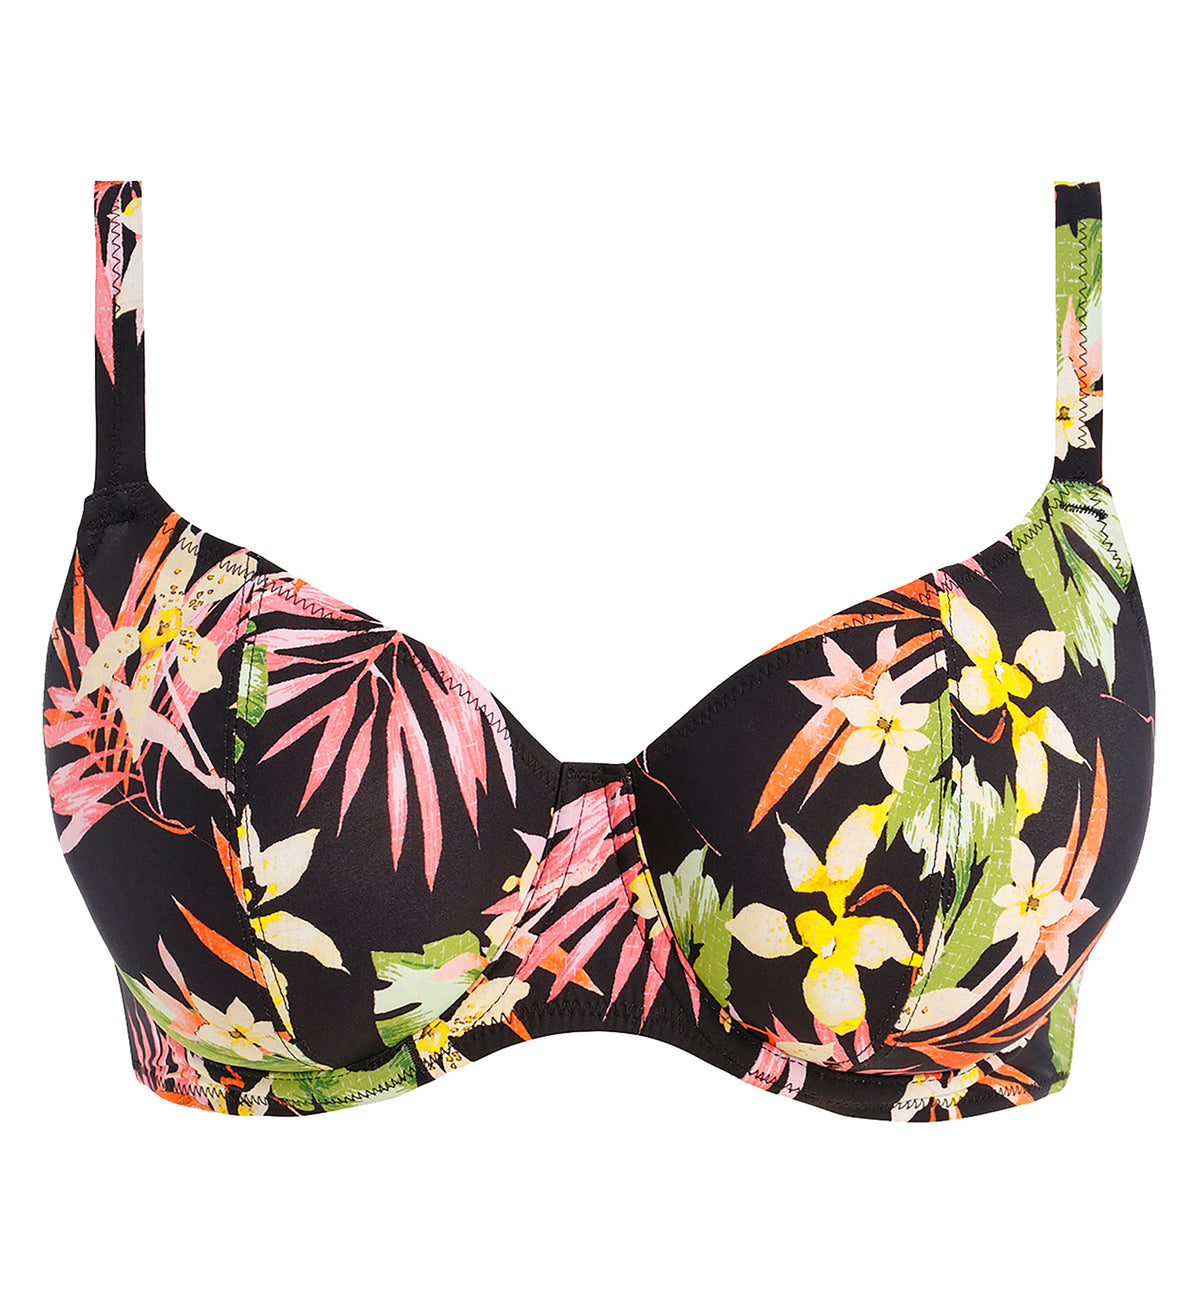 Freya Savanna Sunset Underwire Plunge Bikini Top (204102),28FF,Multi - Multi,28FF